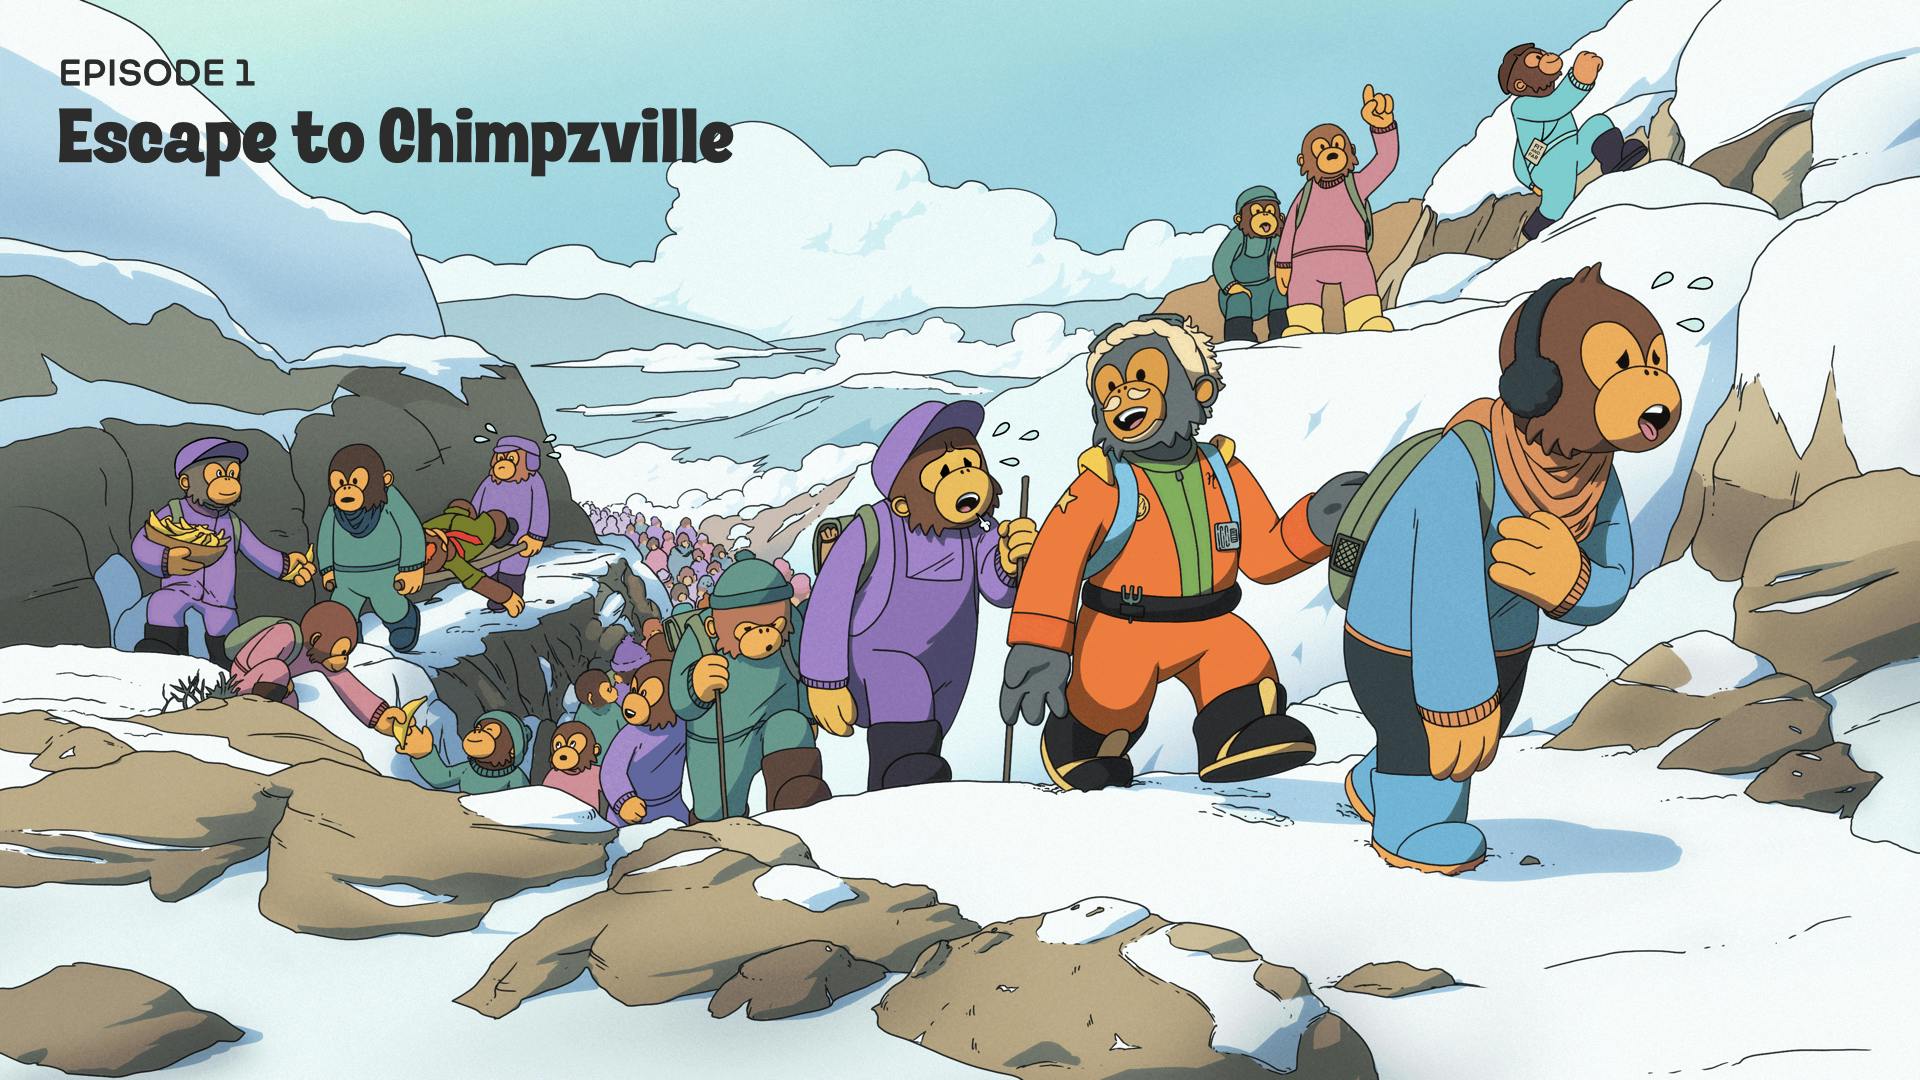 A webcomic scene from AstroChimpz Episode 1: Escape to Chimpzville. 